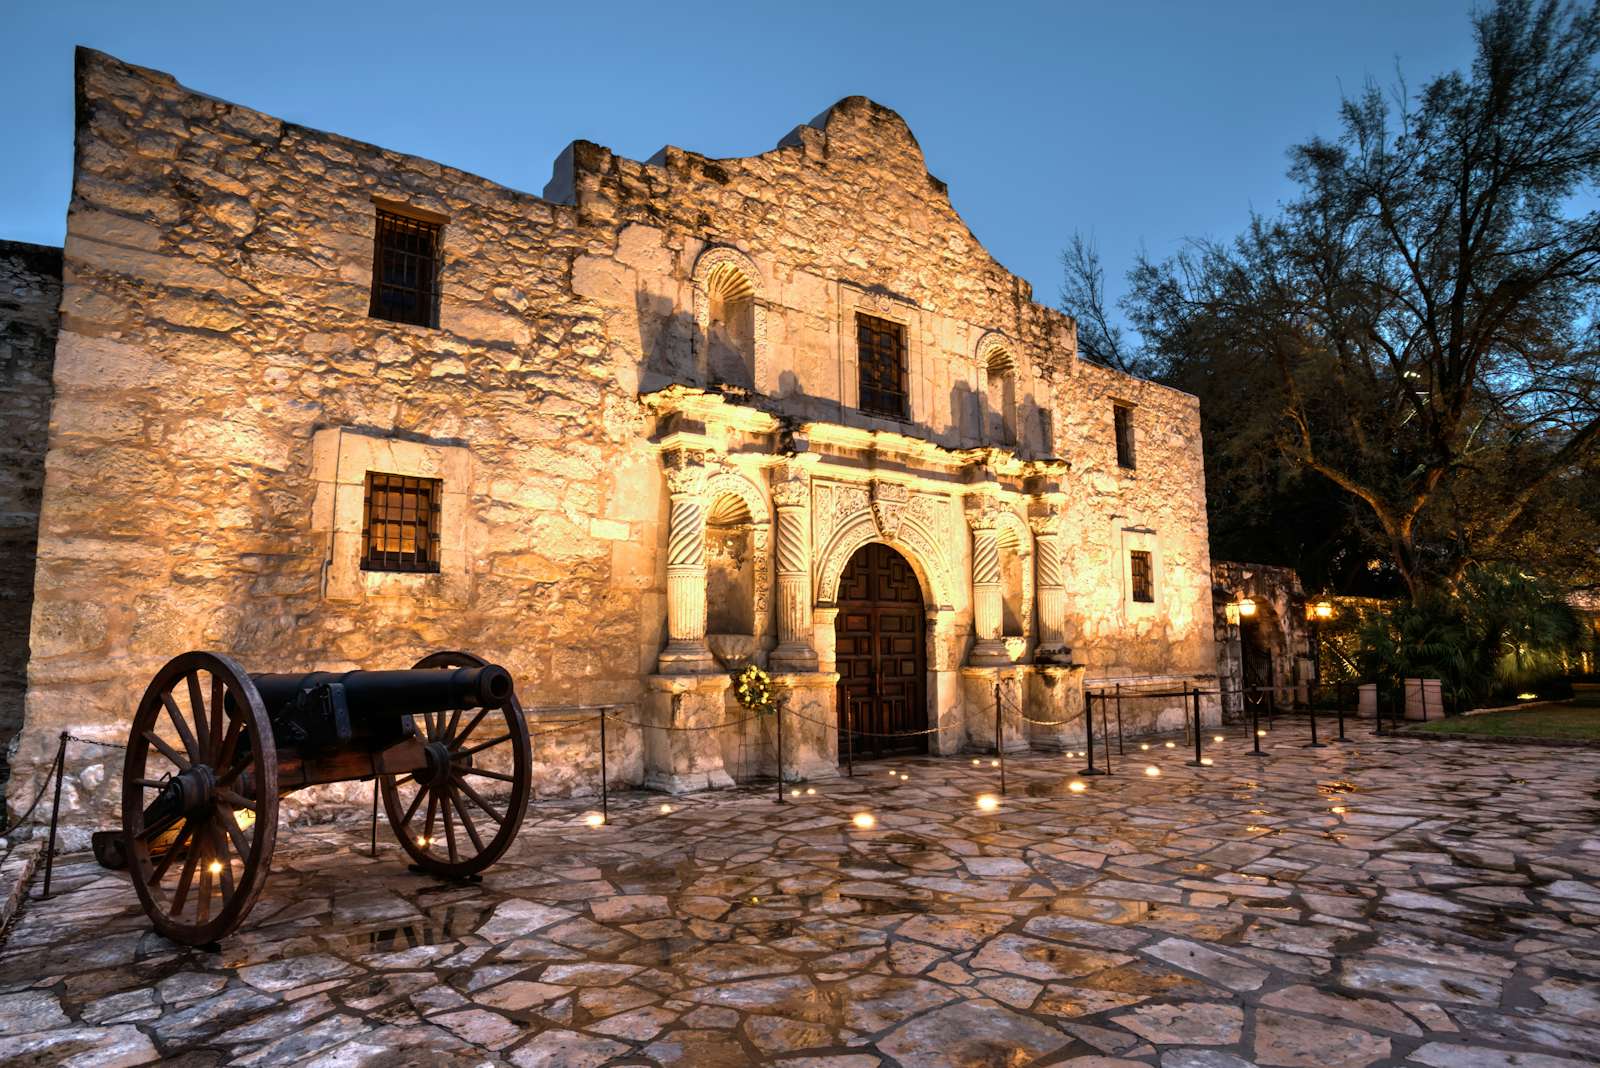 The Alamo in San Antonio Texas